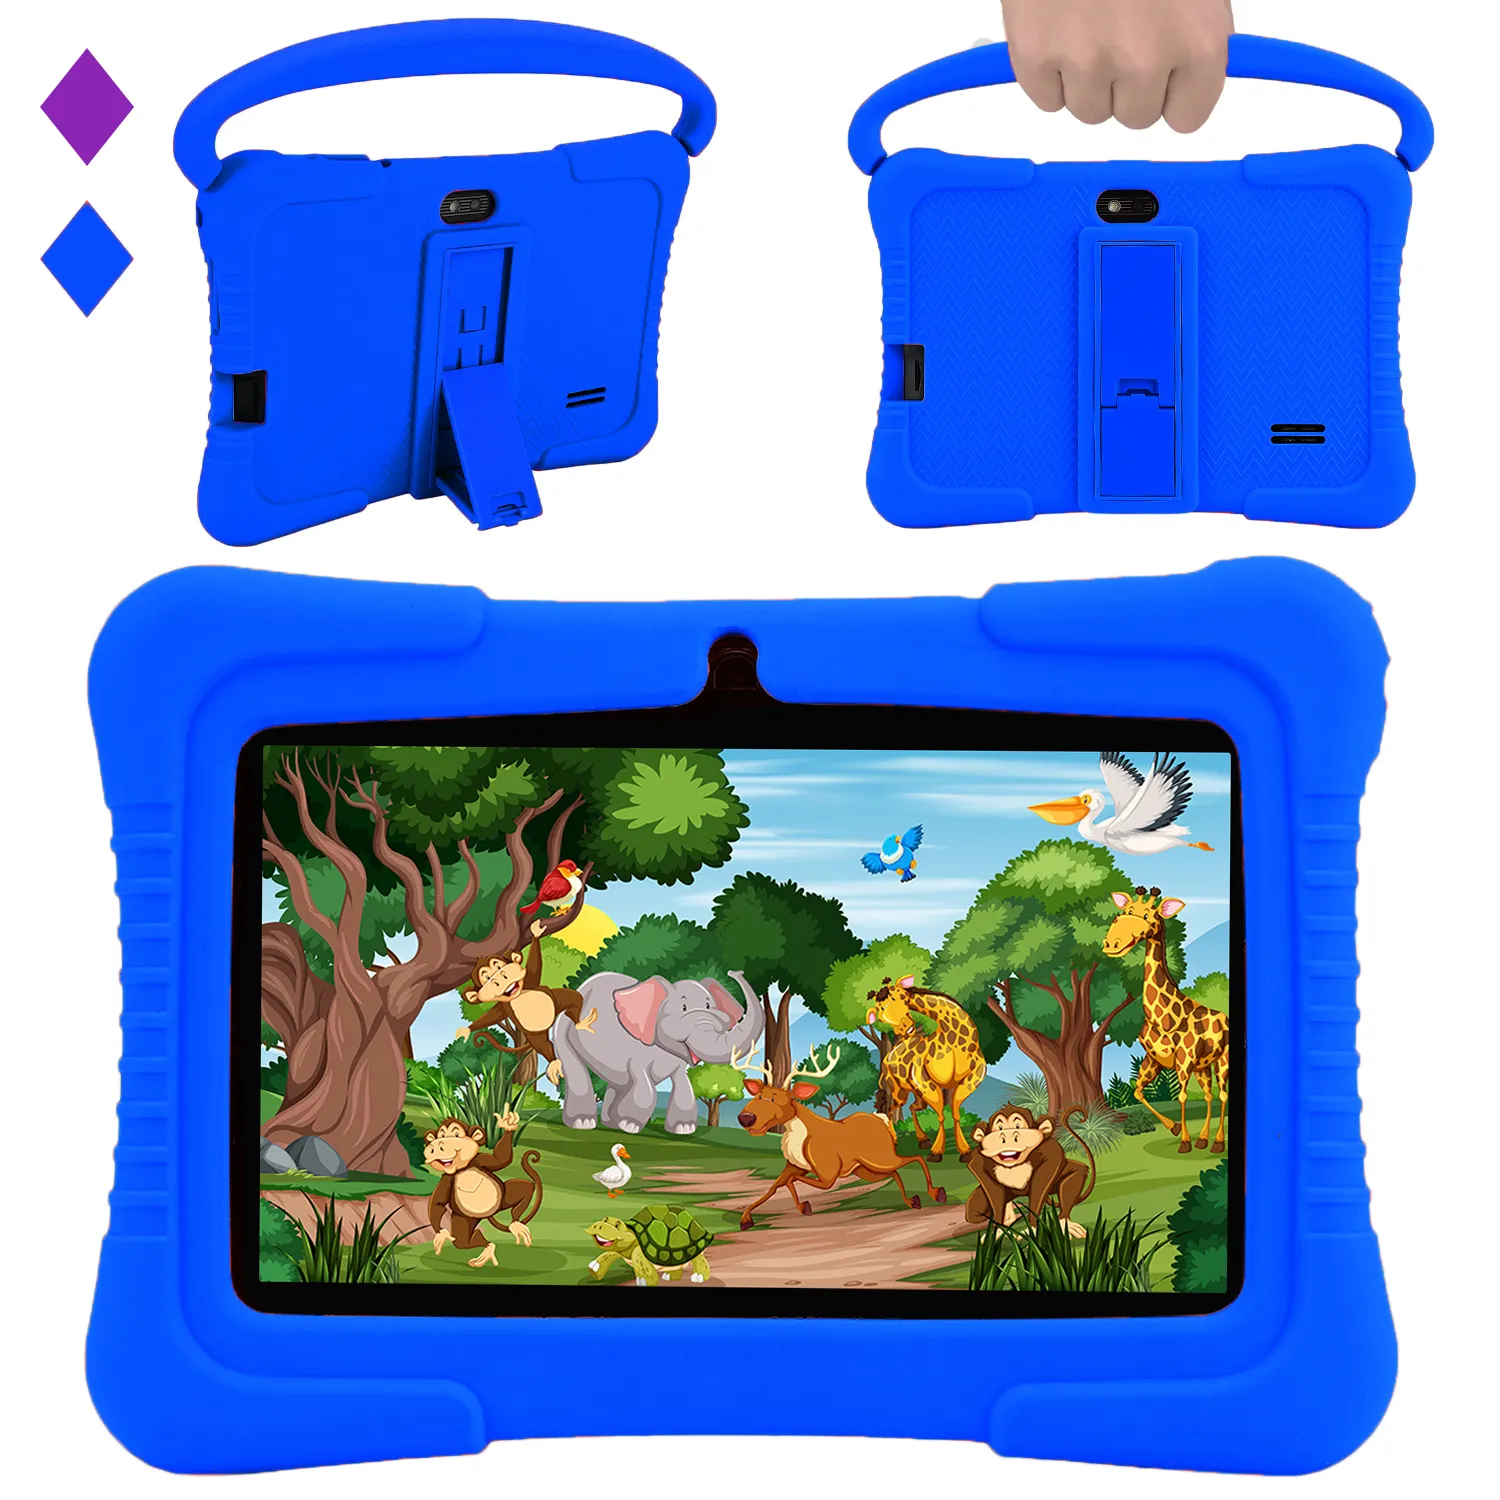 Veidoo Kids Tablet Pc 7インチAndroid Tablet for Kids 2GB Ram32GBストレージ幼児用タブレット (IPSスクリーン付き) 親コントロール